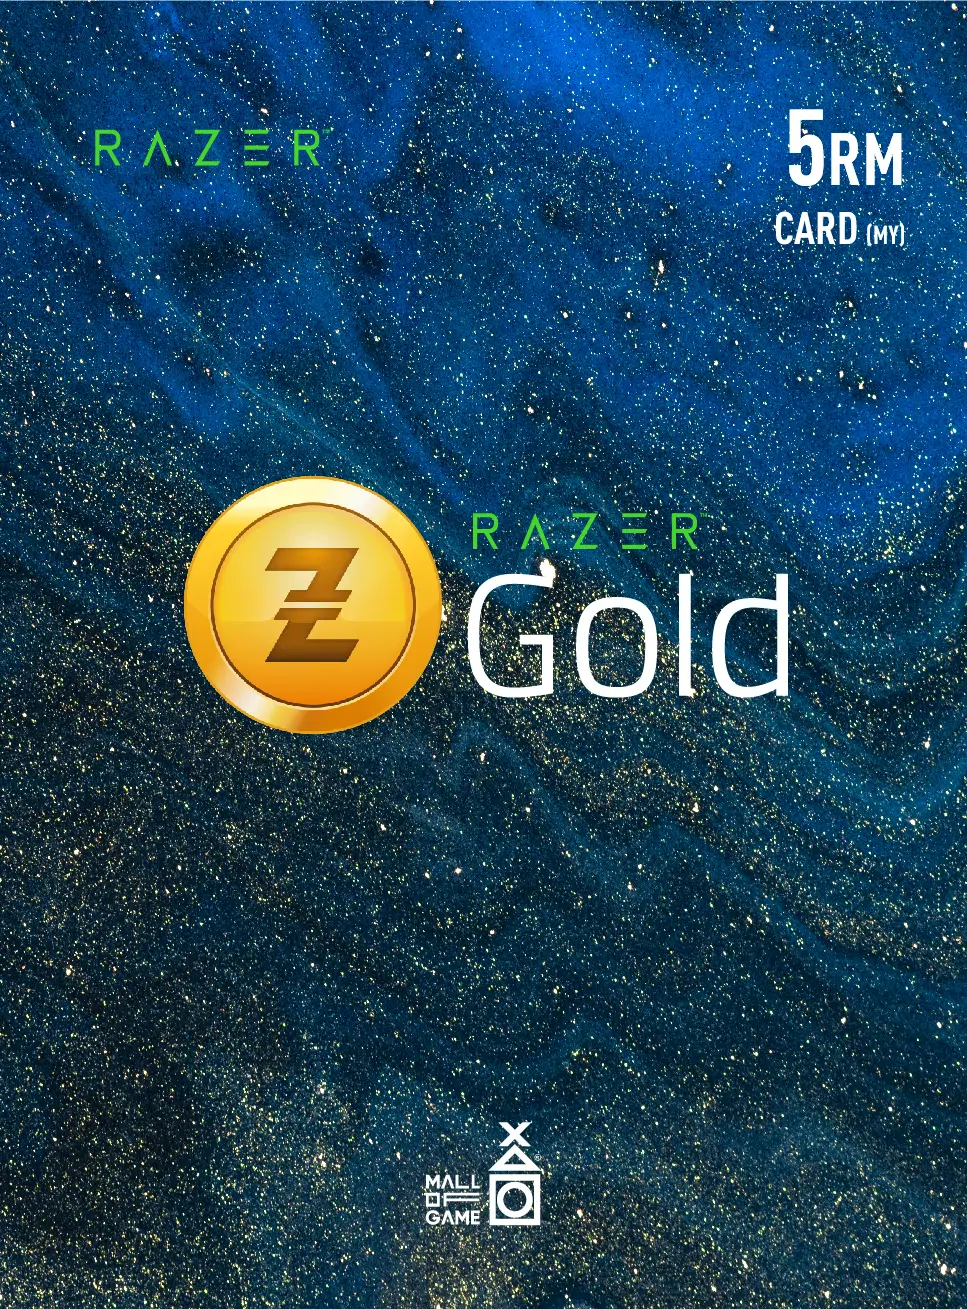 Razer Gold RM5 (MY)